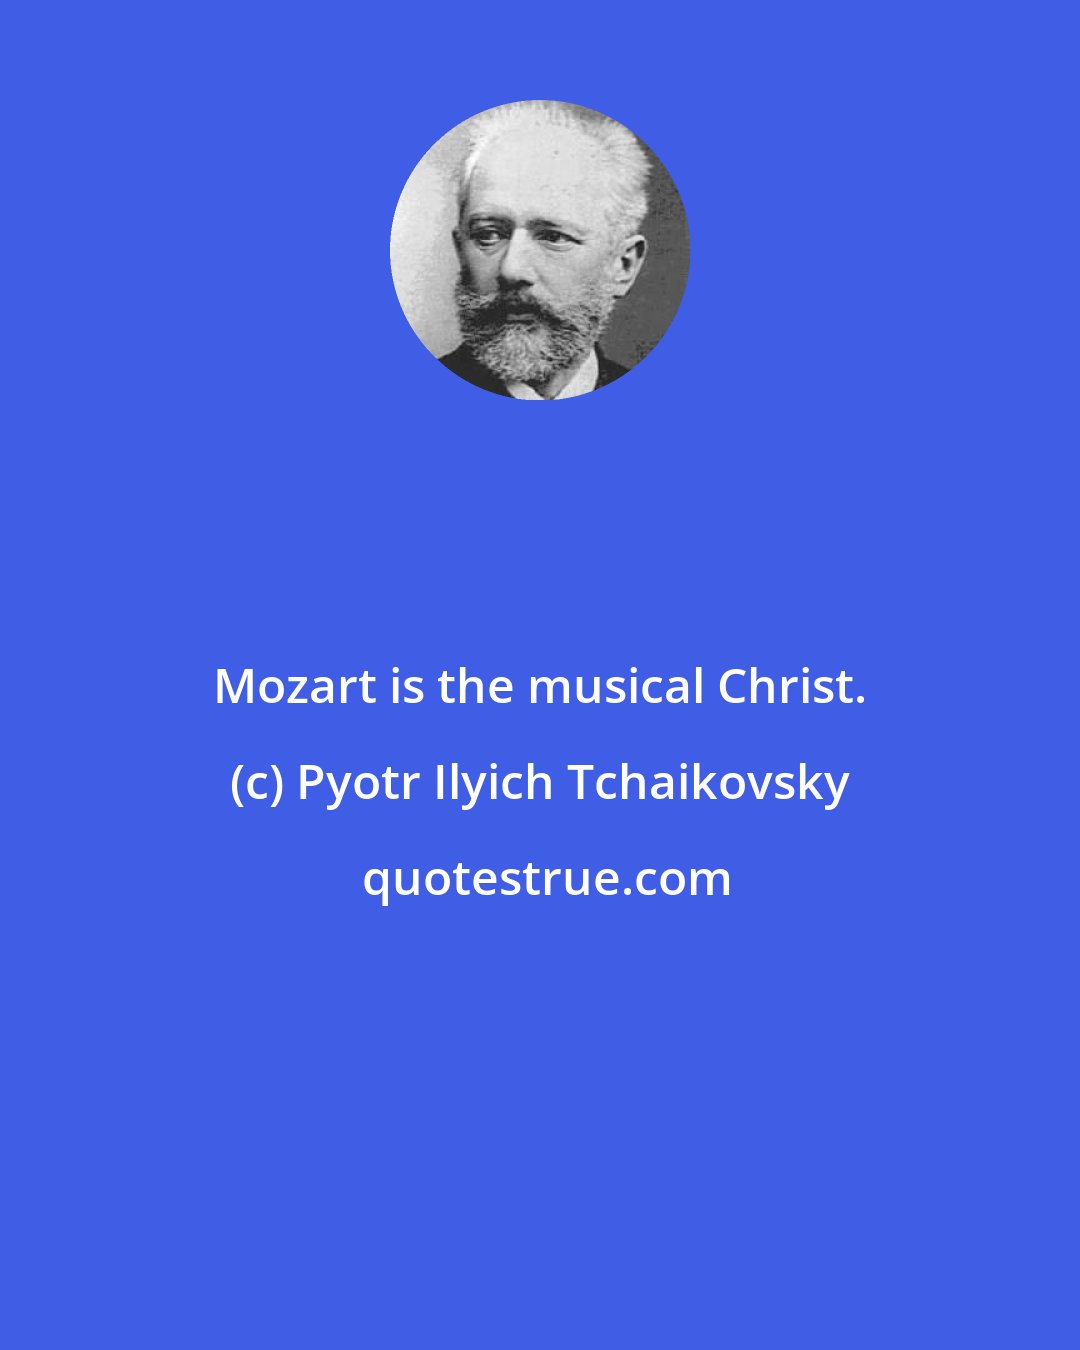 Pyotr Ilyich Tchaikovsky: Mozart is the musical Christ.